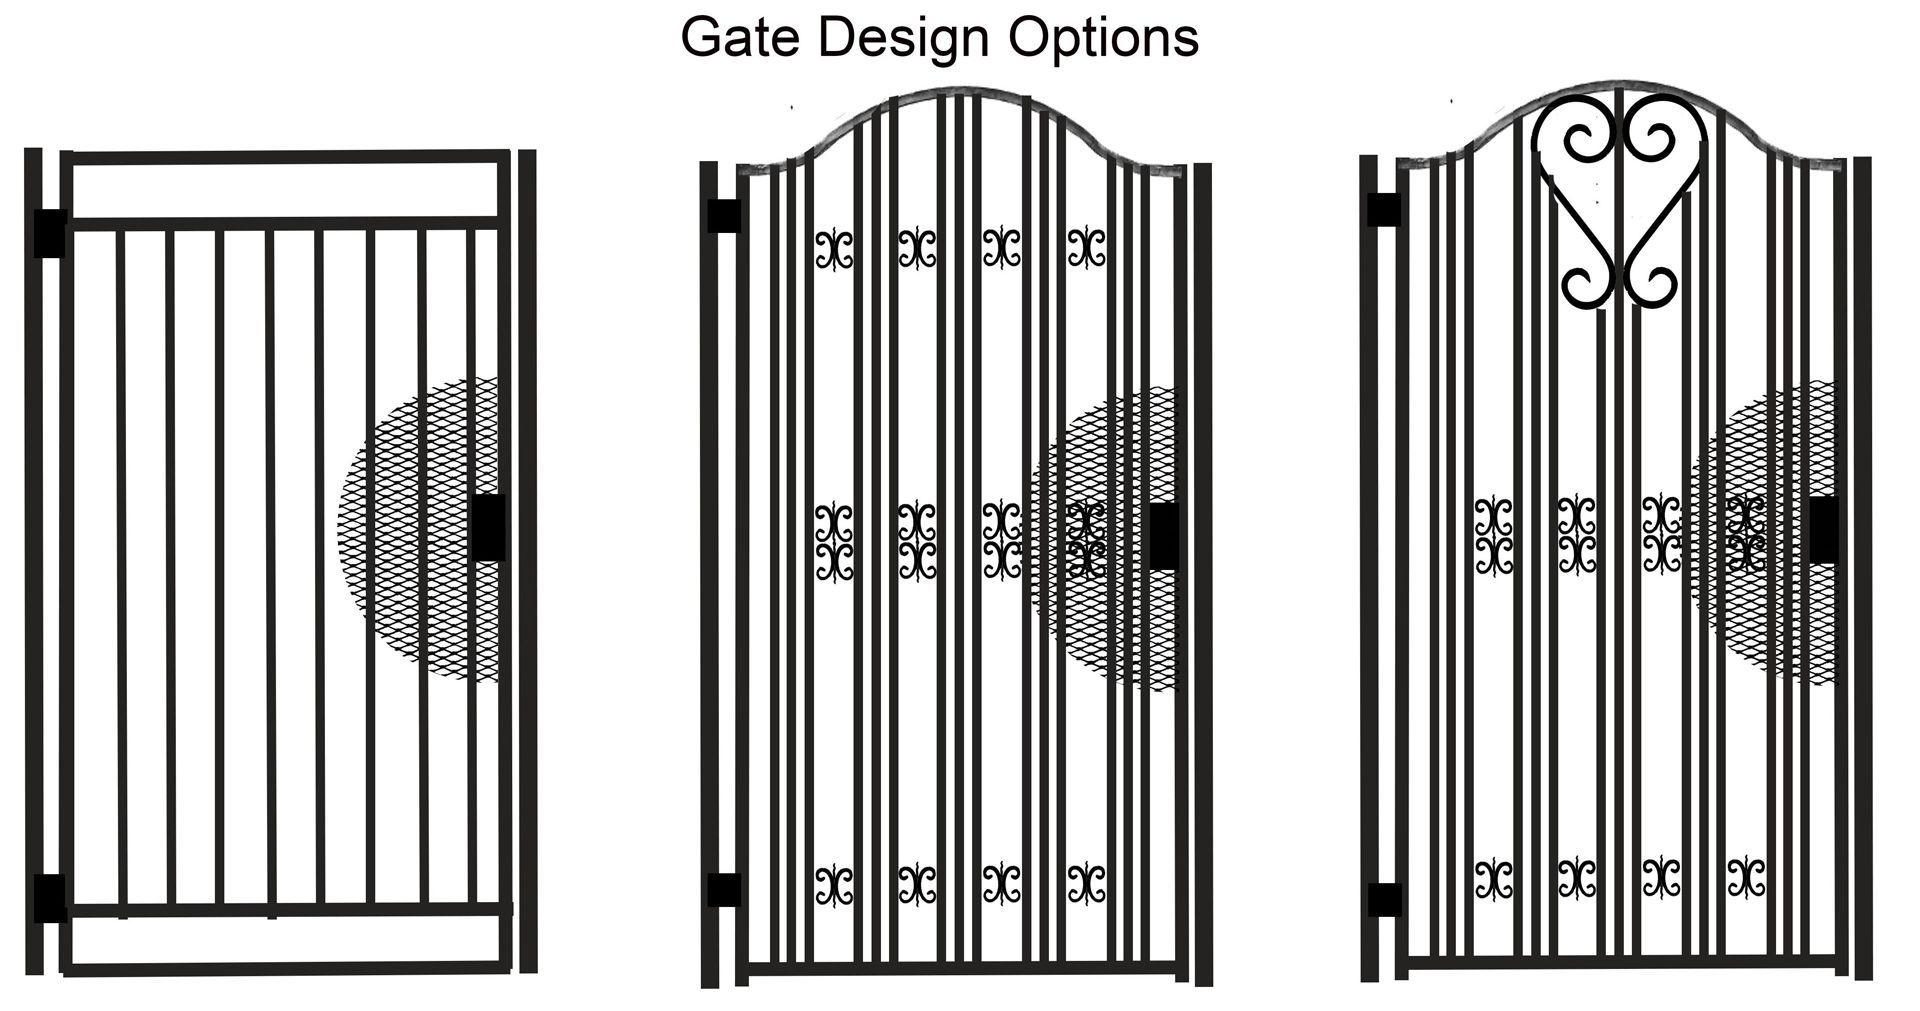 Different Gate Design Options